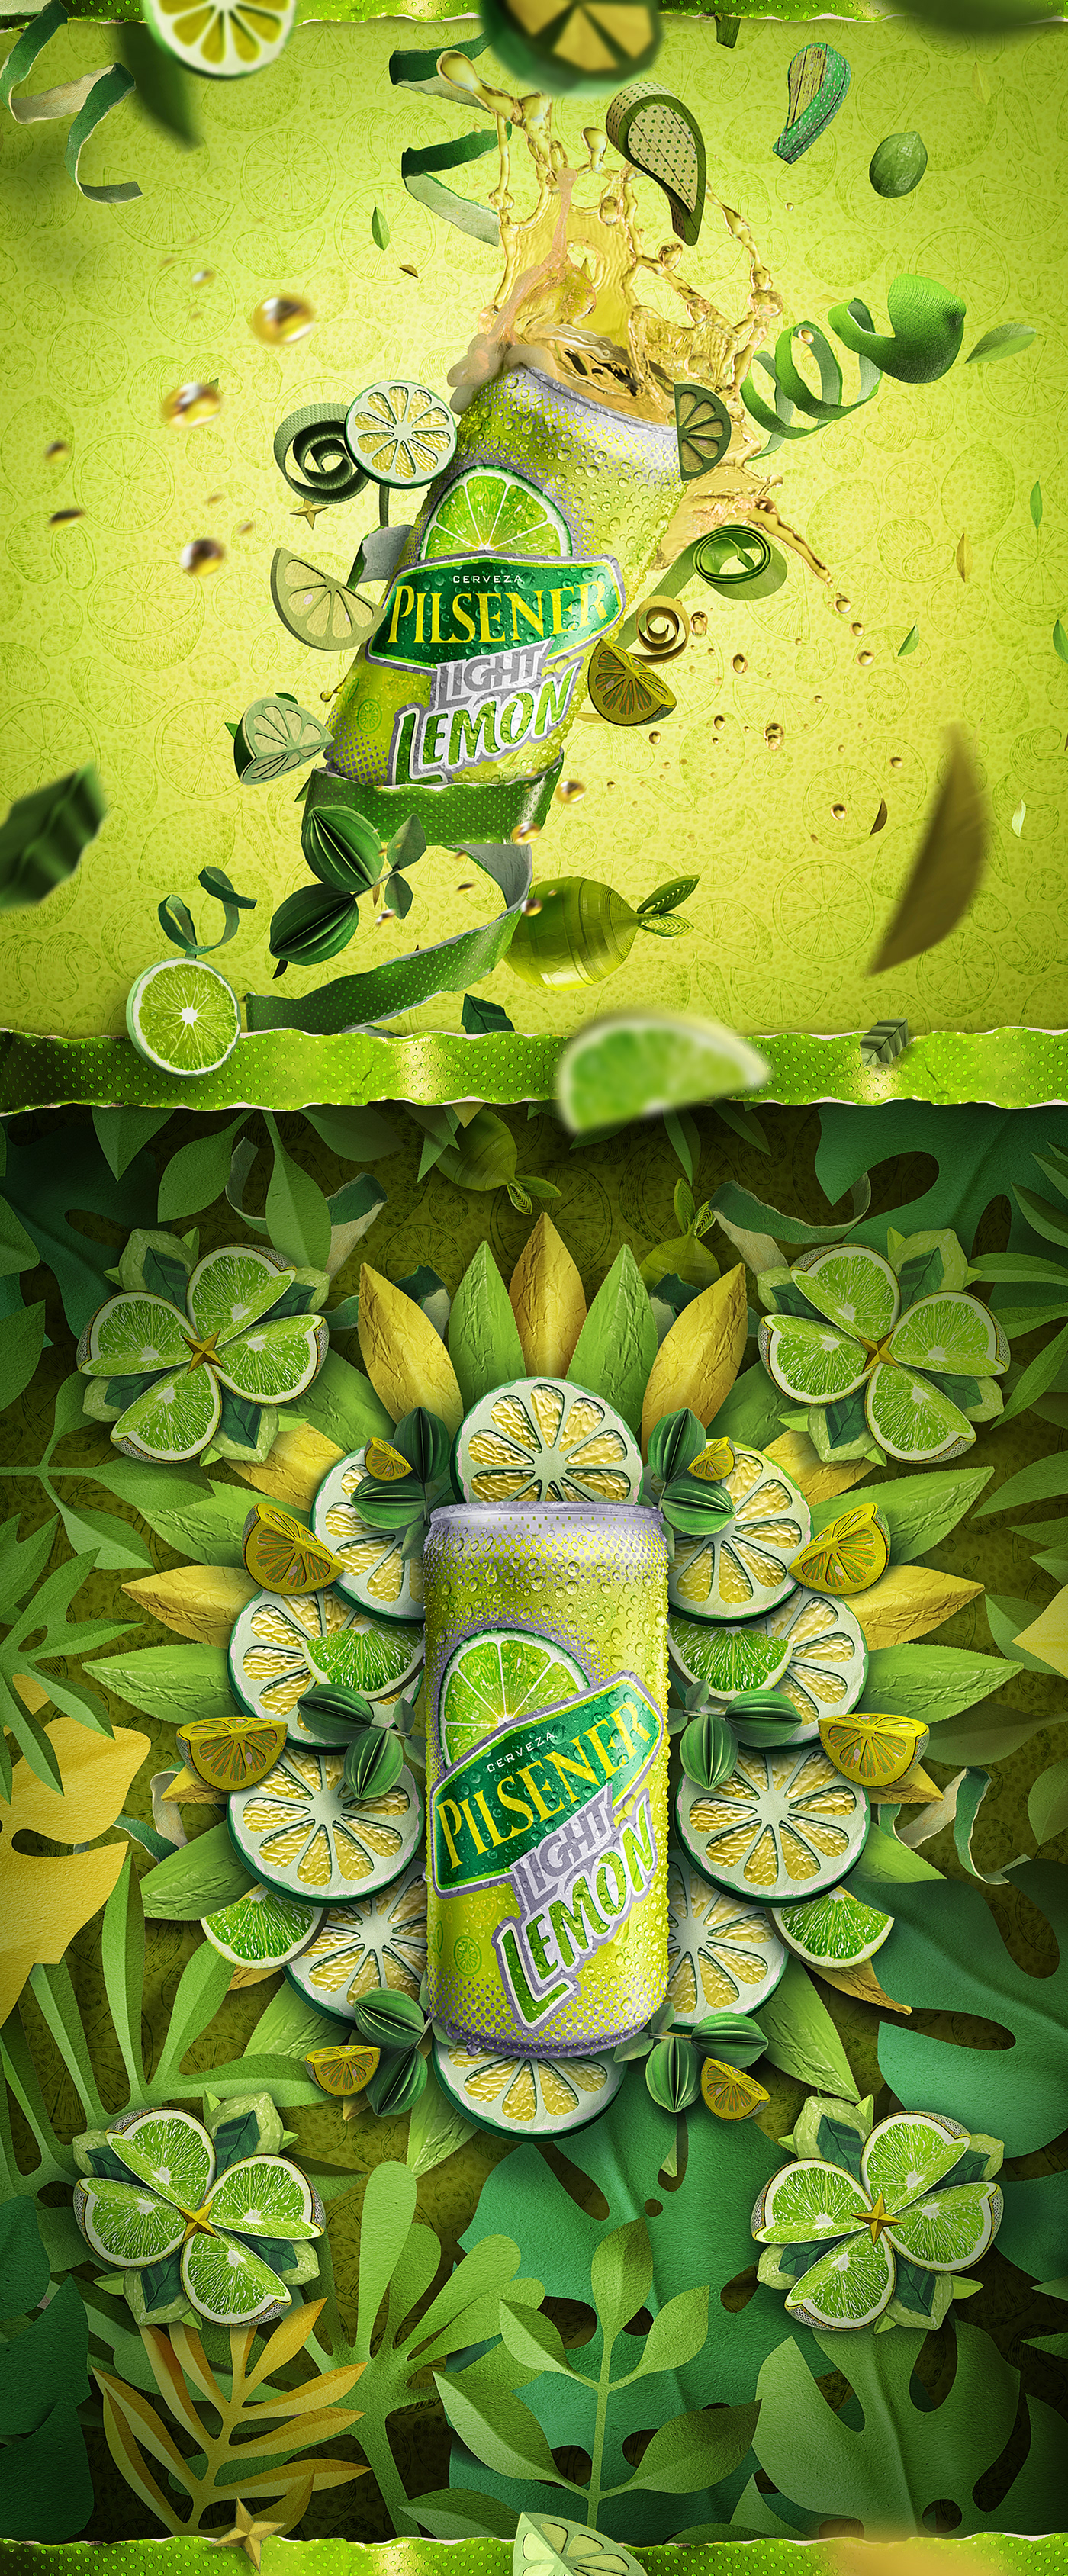 lemon pilsener light beer craft Packaging 3D CGI innovation